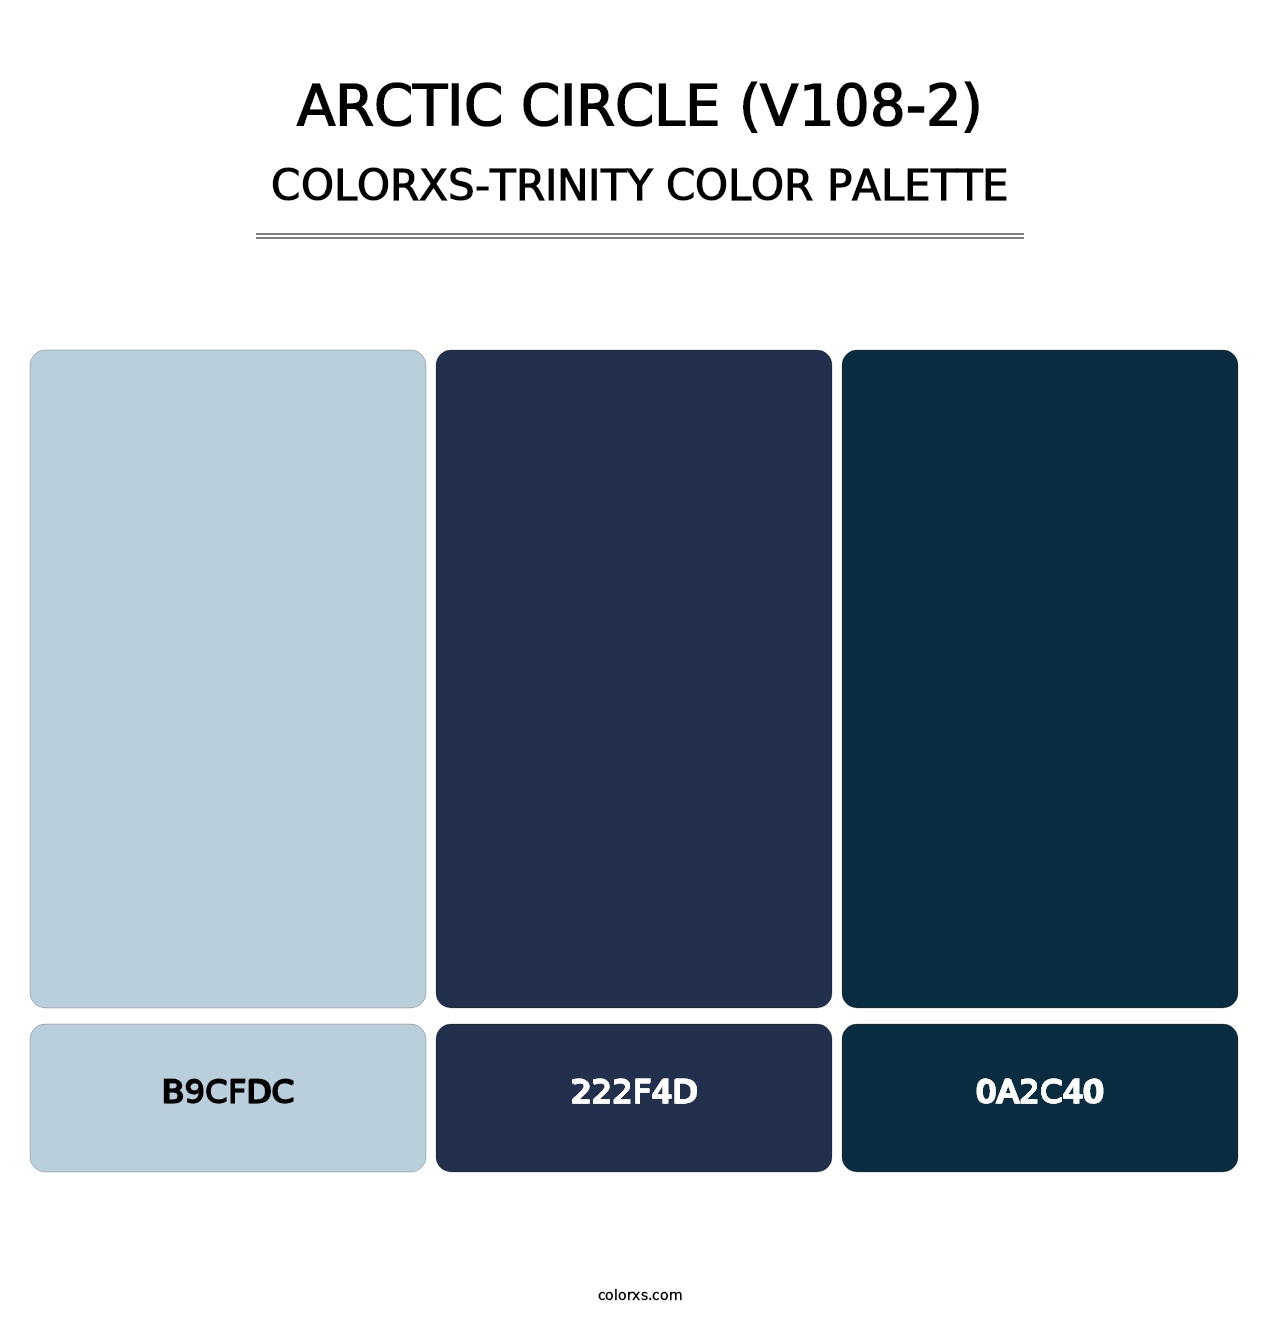 Arctic Circle (V108-2) - Colorxs Trinity Palette